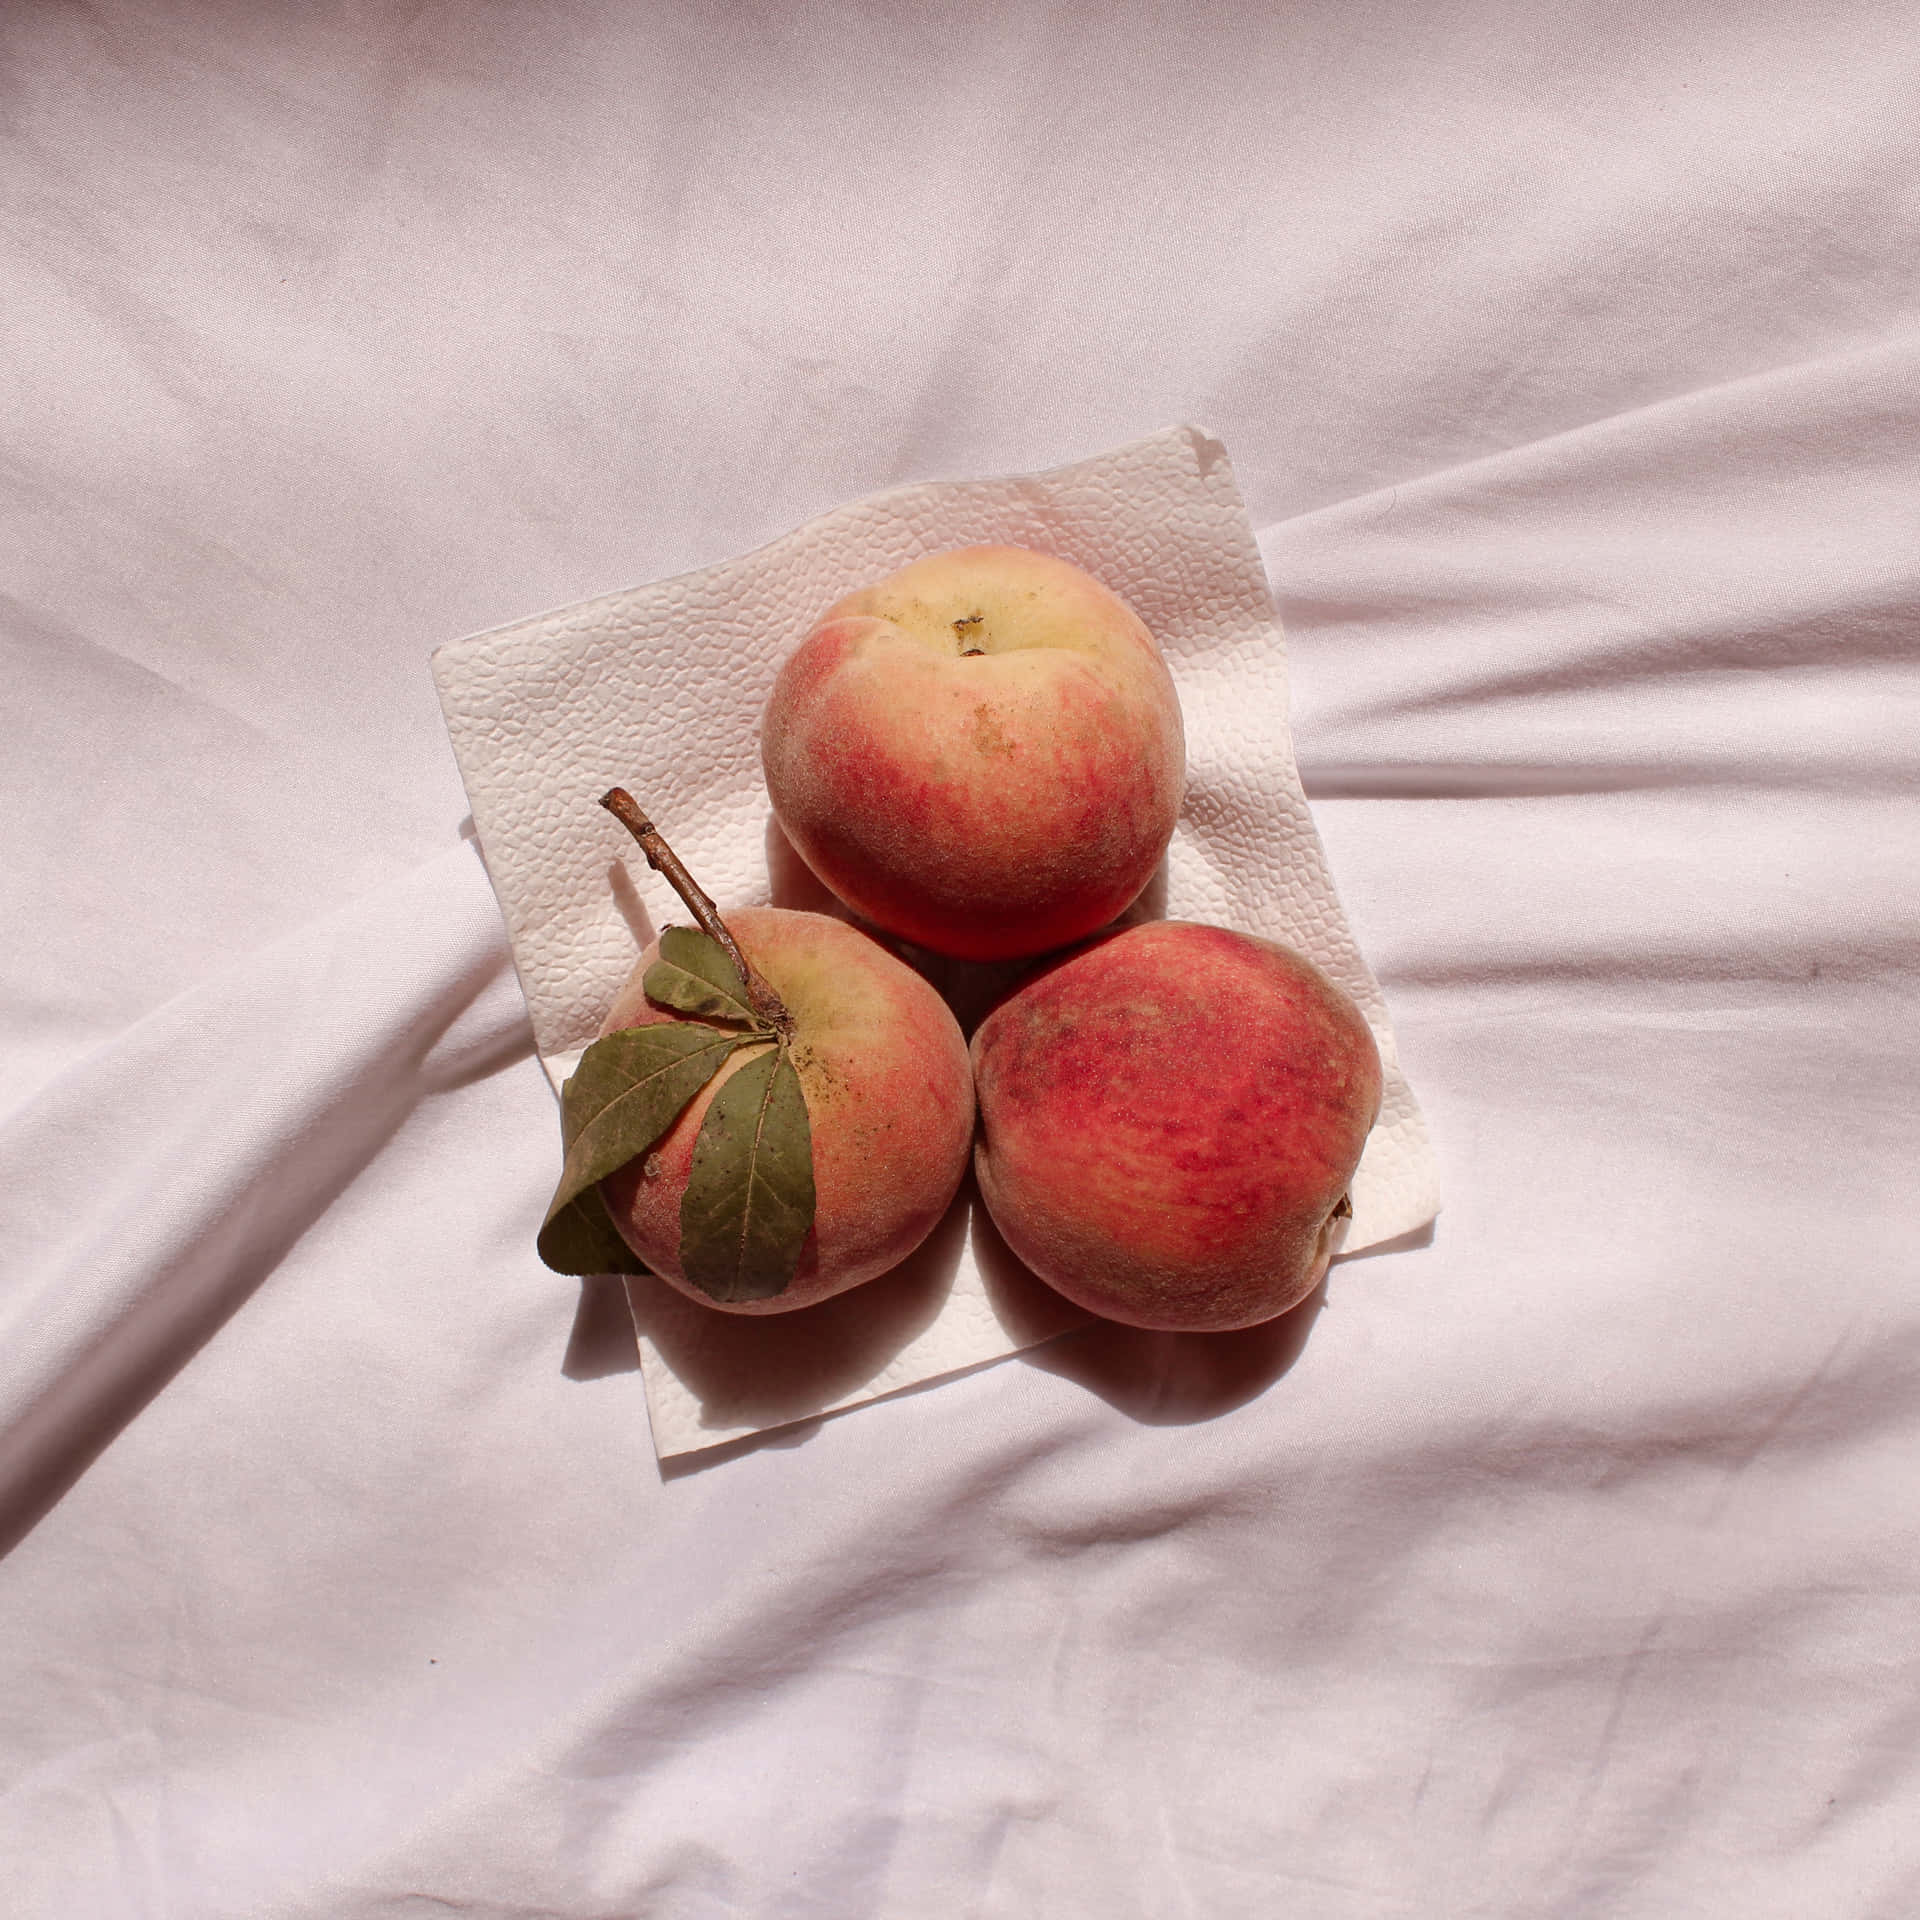 Enjoy ripe juicy peaches anytime!